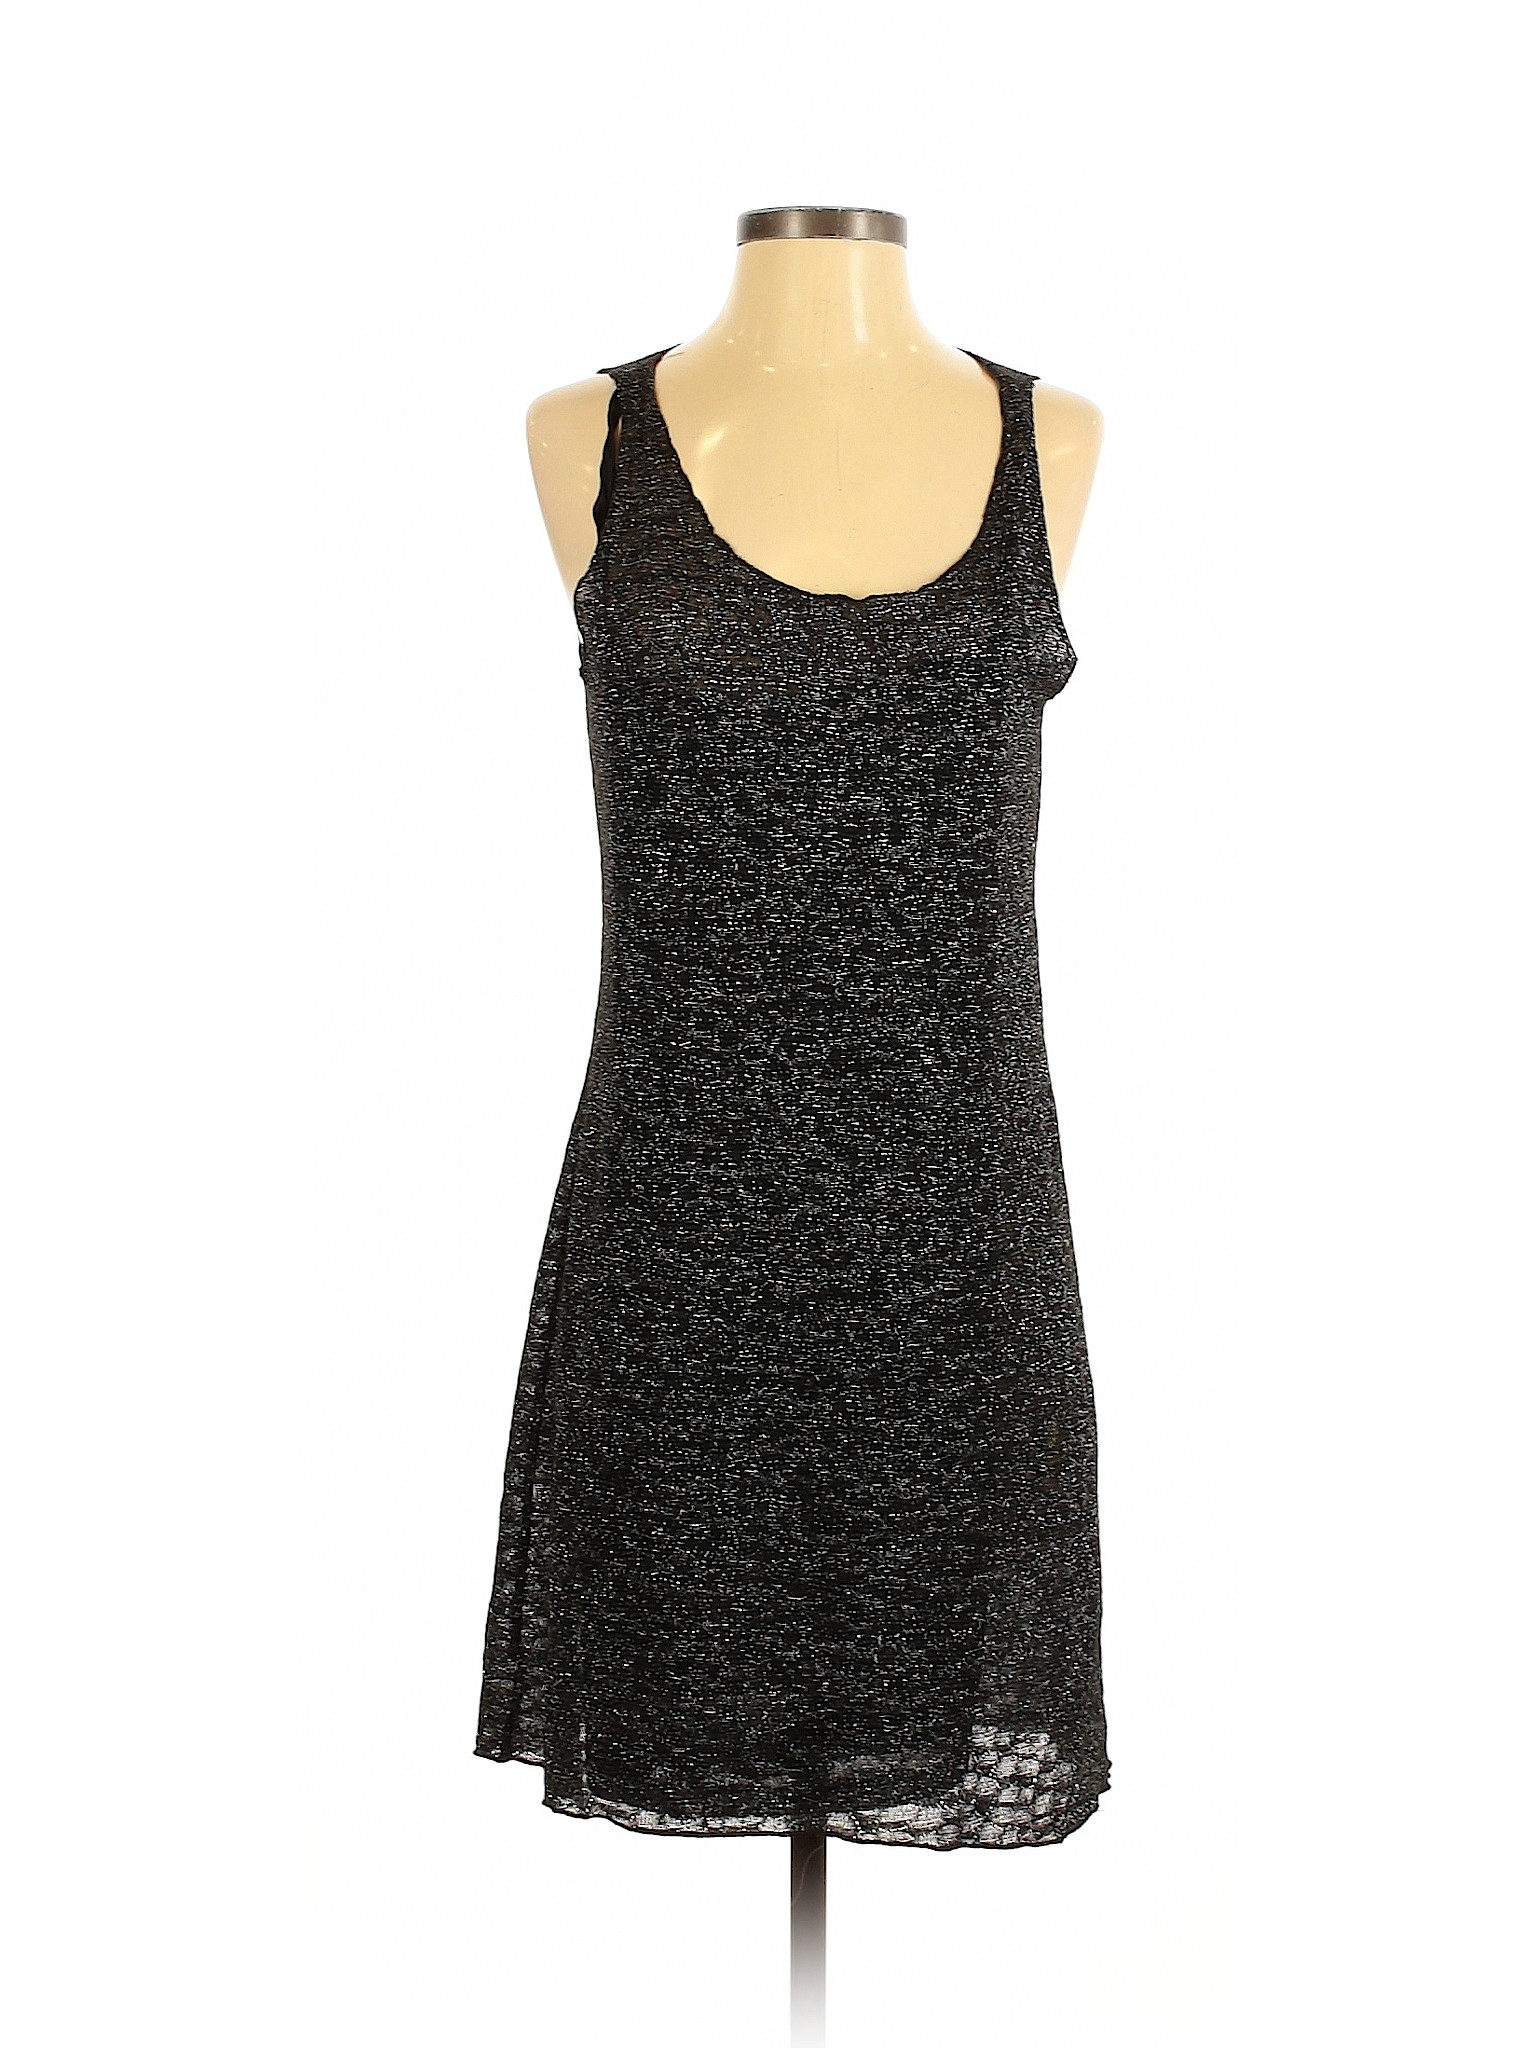 MNG Women Black Cocktail Dress S | eBay